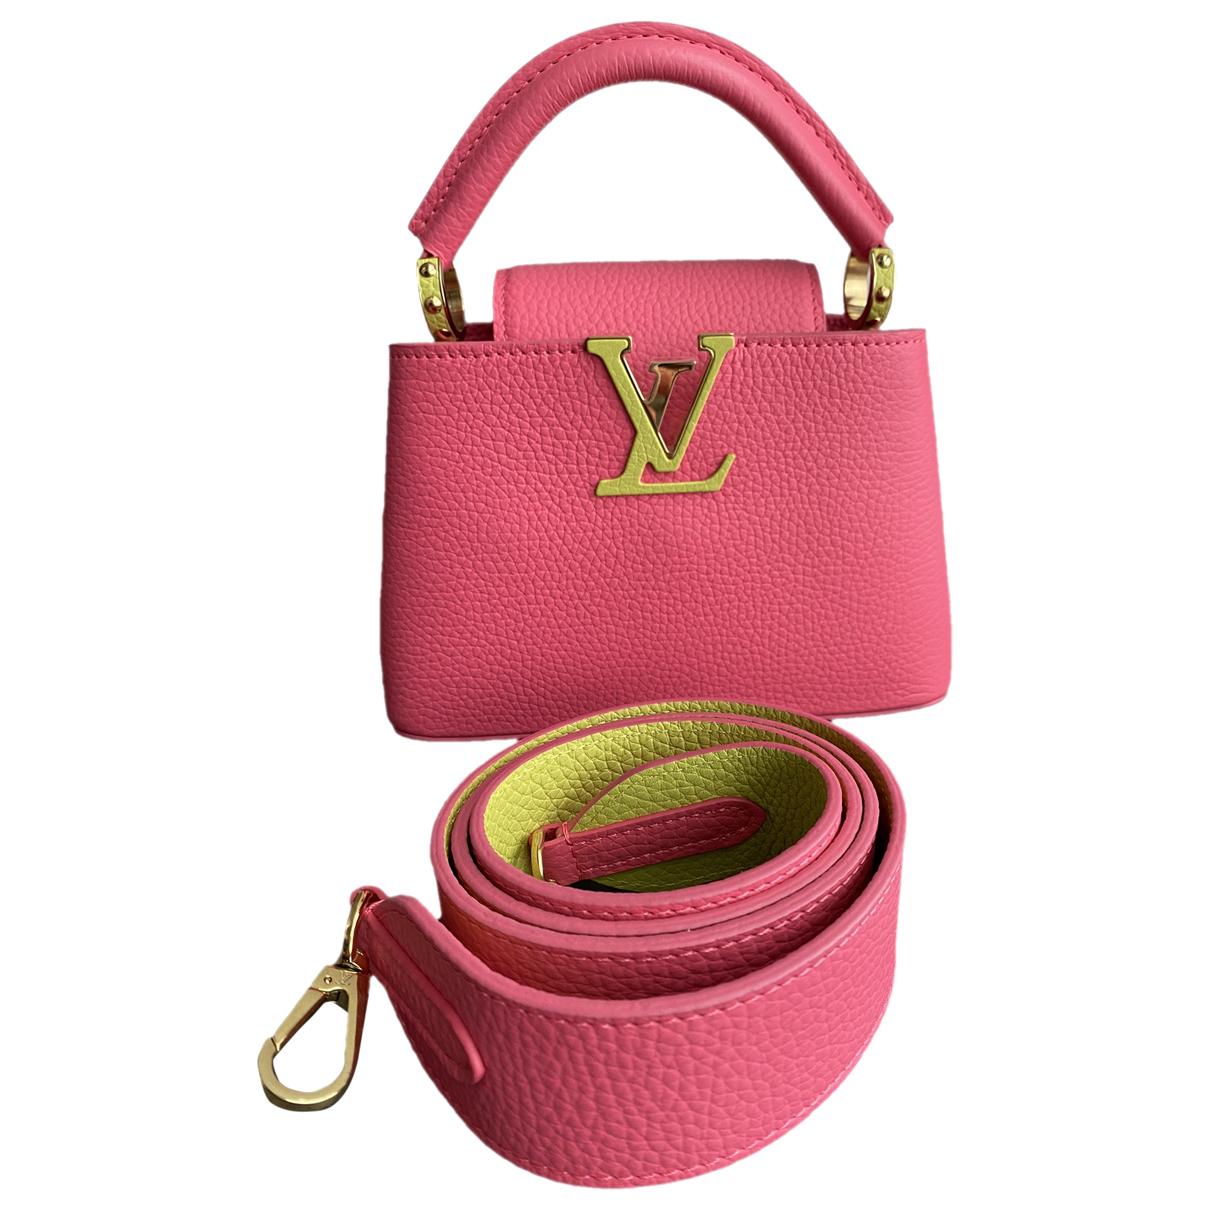 Bolsos de mano Louis Vuitton de color rosa para Mujer - Vestiaire Collective